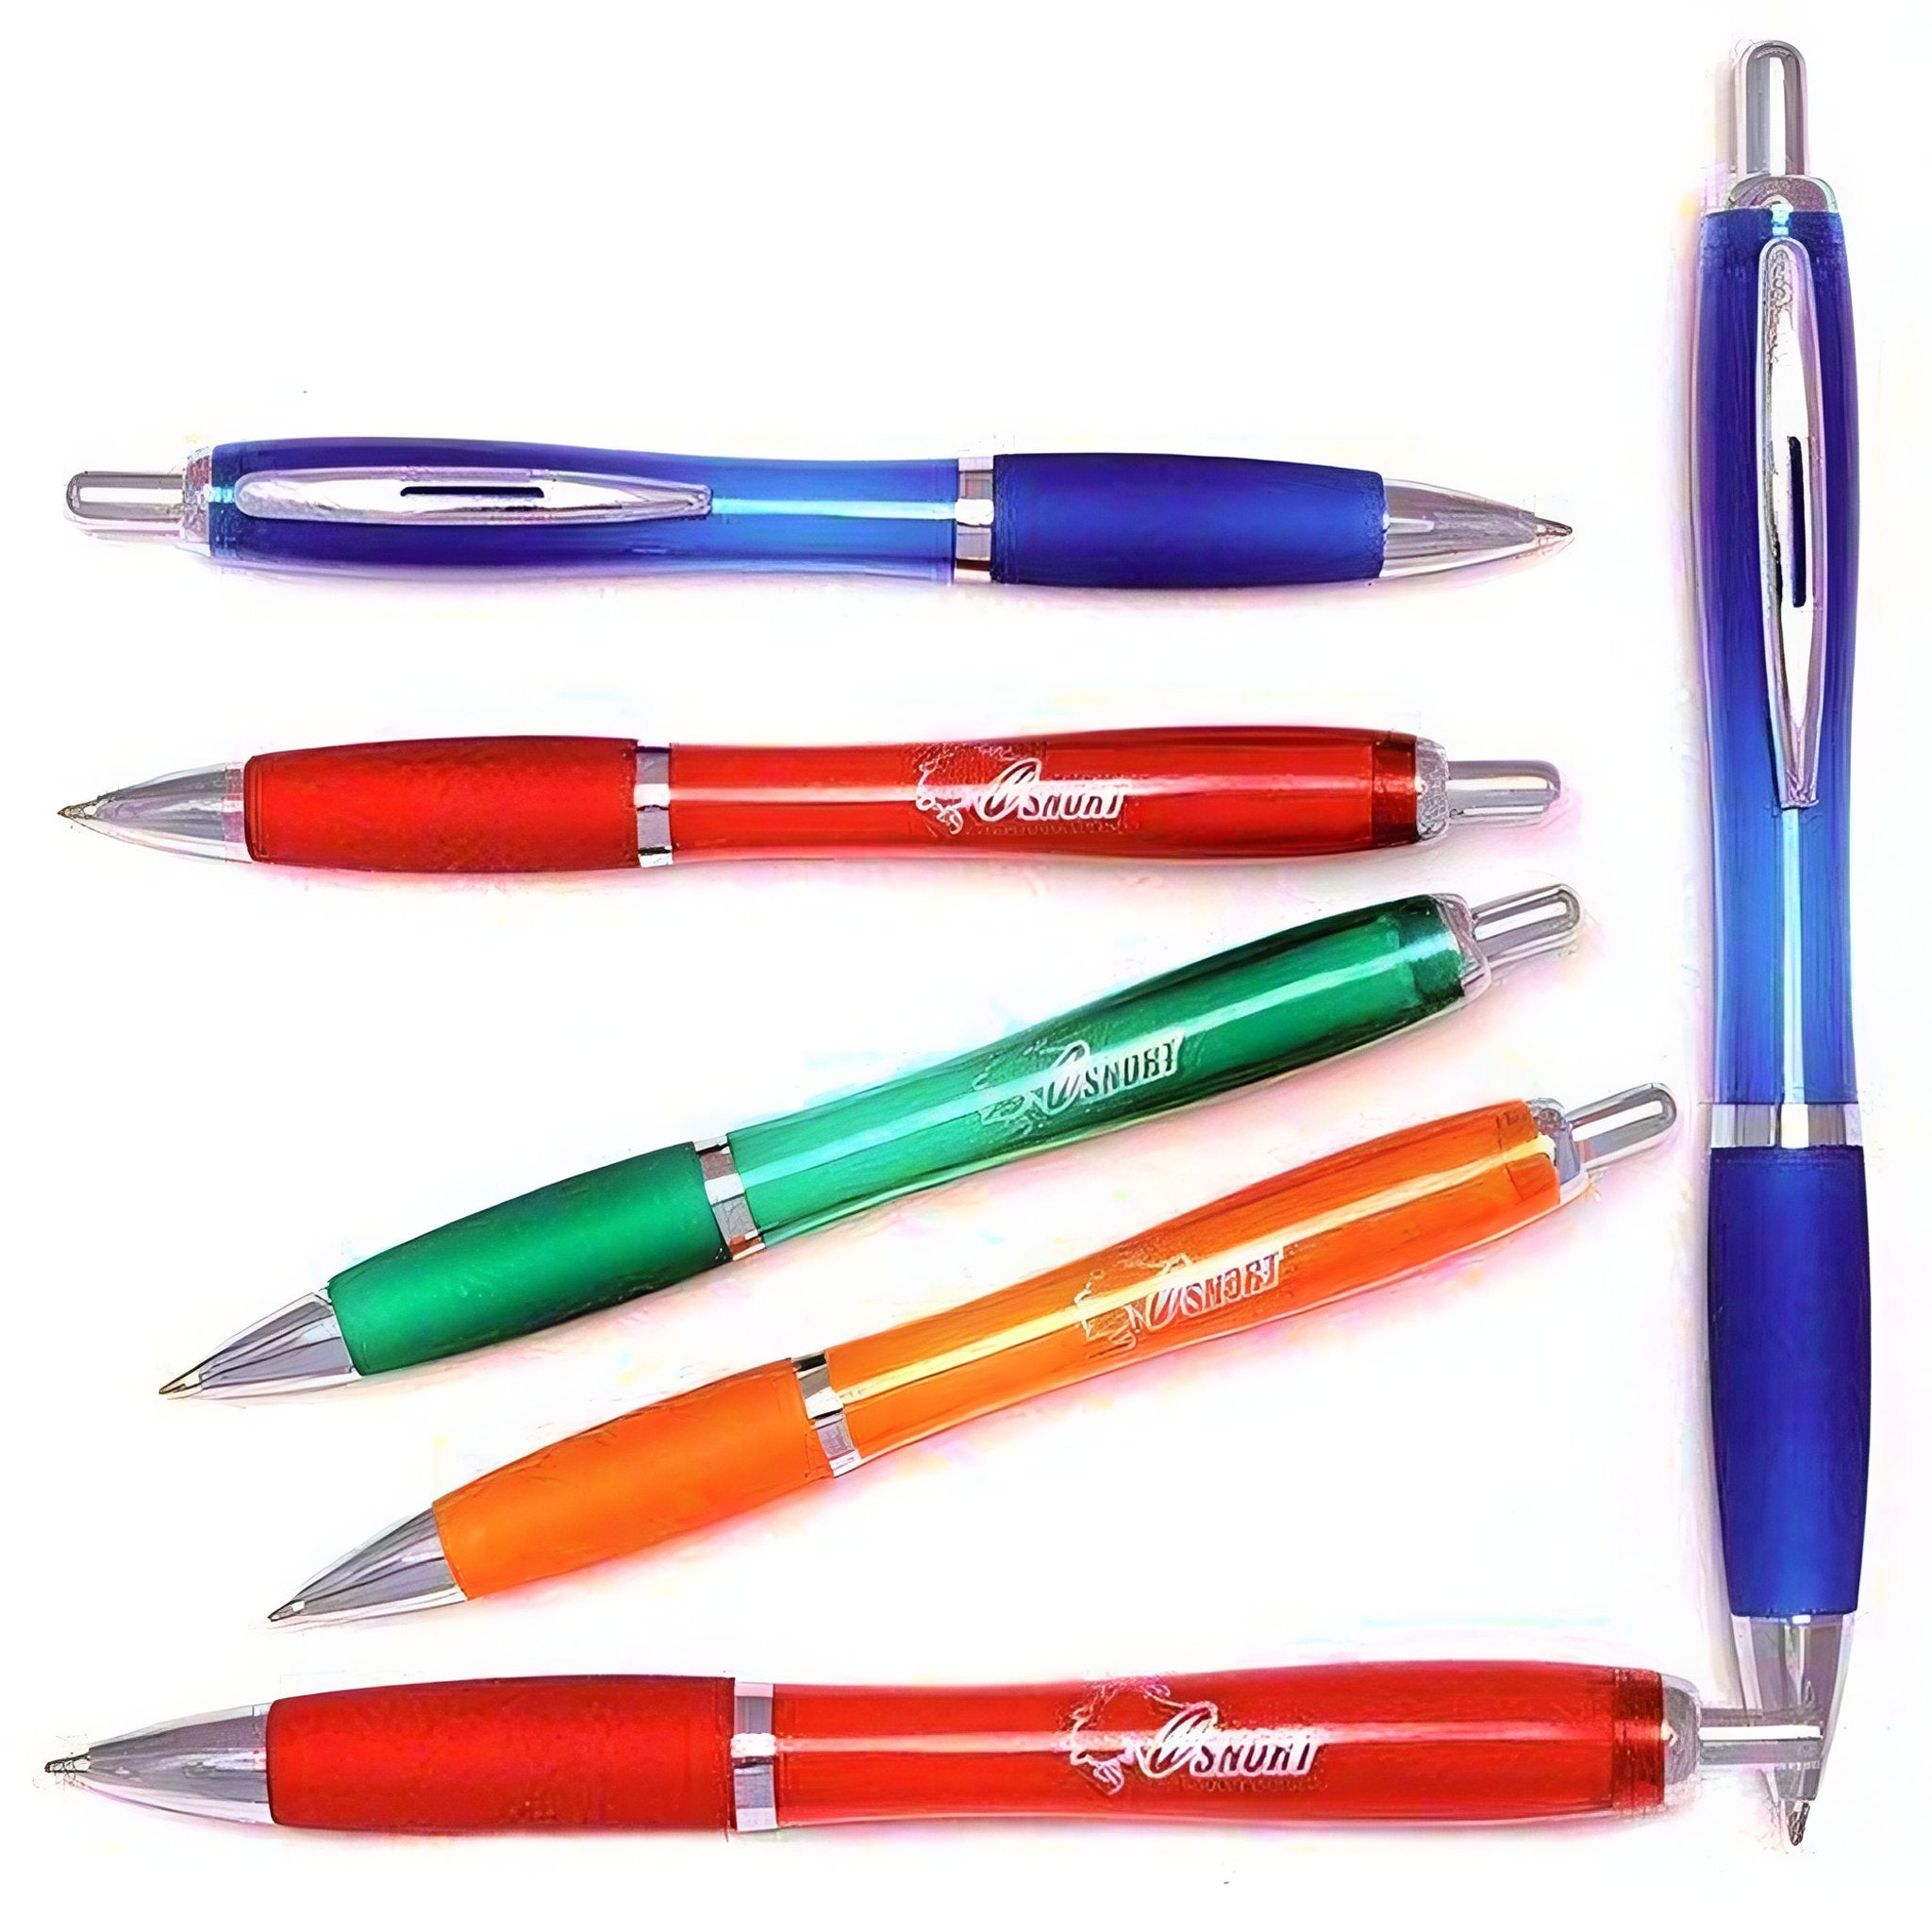 Xpress Gel Ink Pens